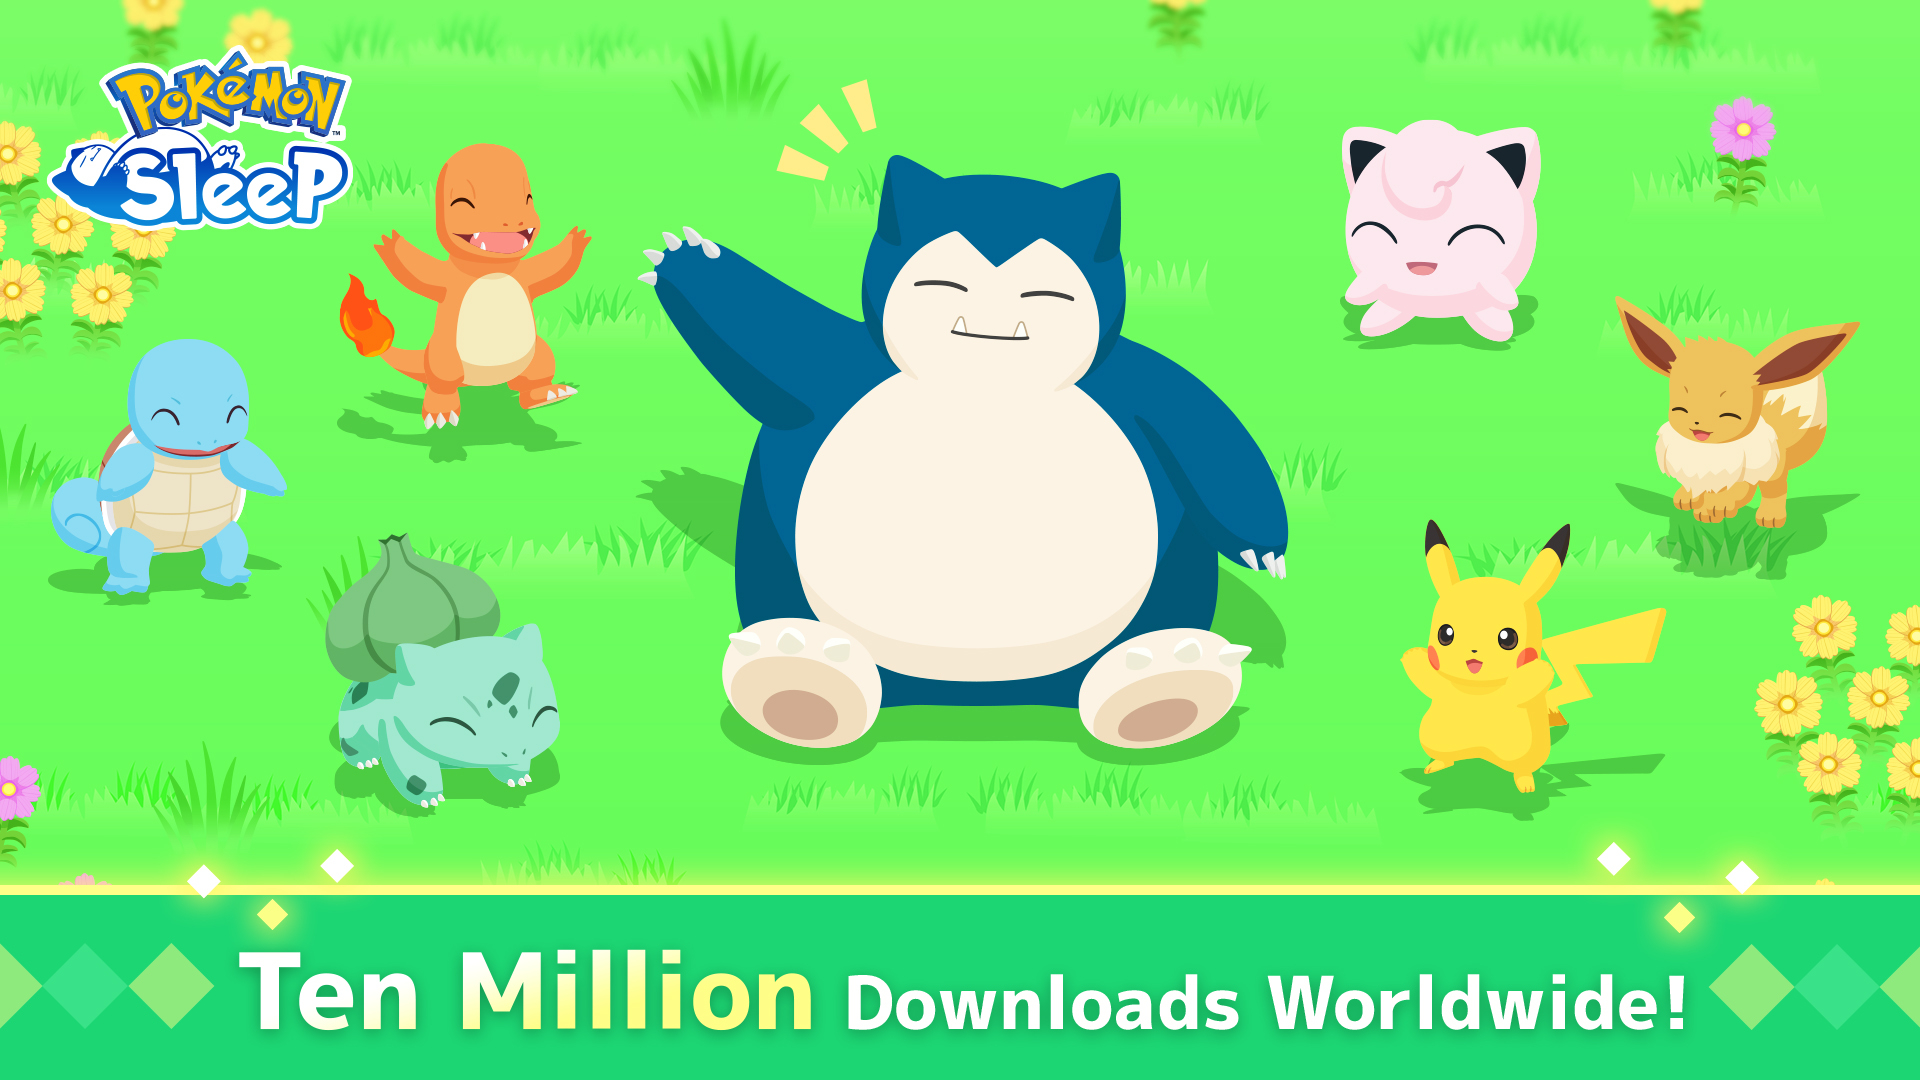 Pokémon Sleep reaches Ten Million Downloads Worldwide